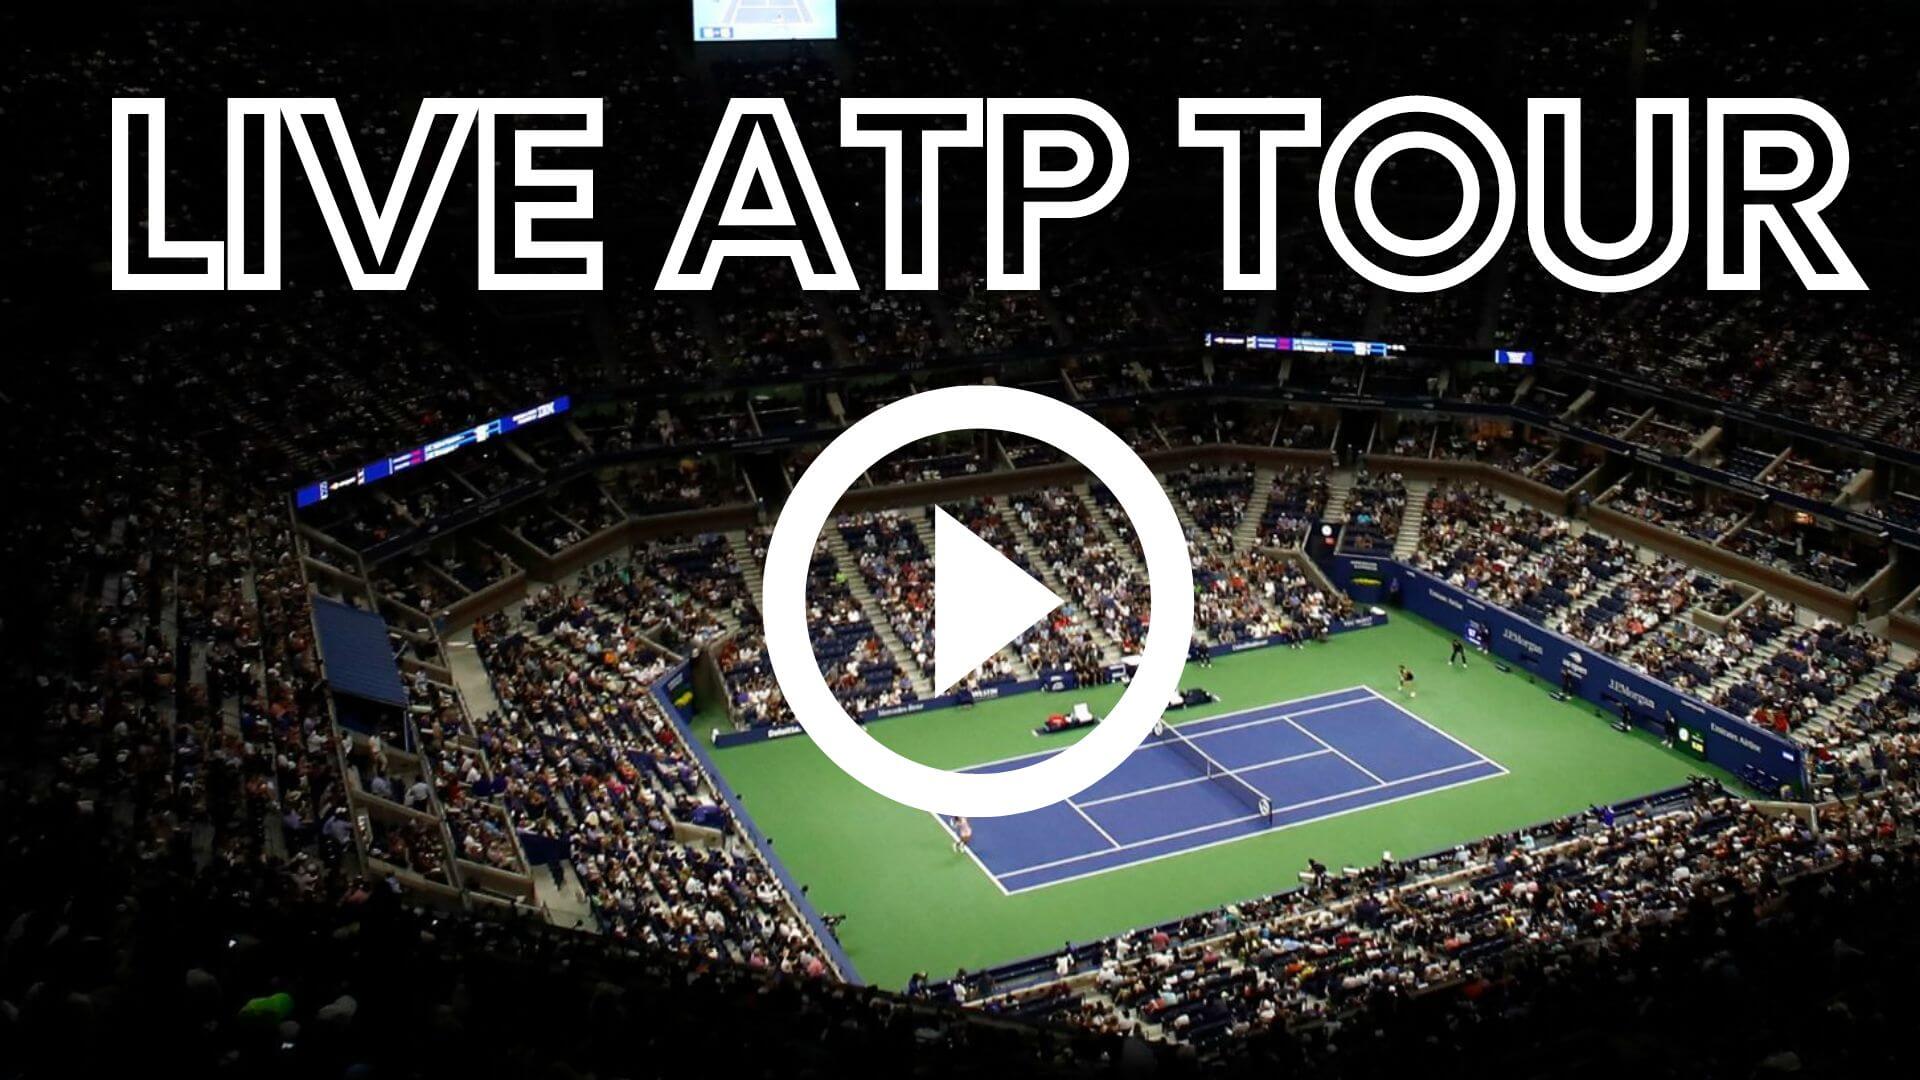 ATP Tennis News